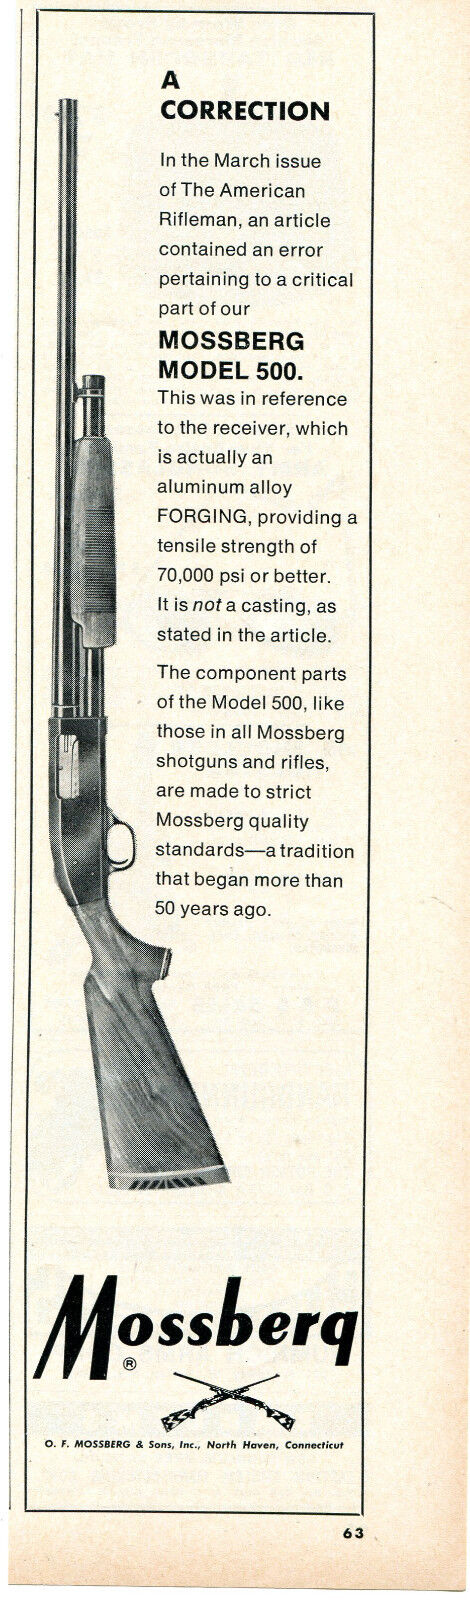 1971 Print Ad of Mossberg Model 500 Shotgun magazine error correction